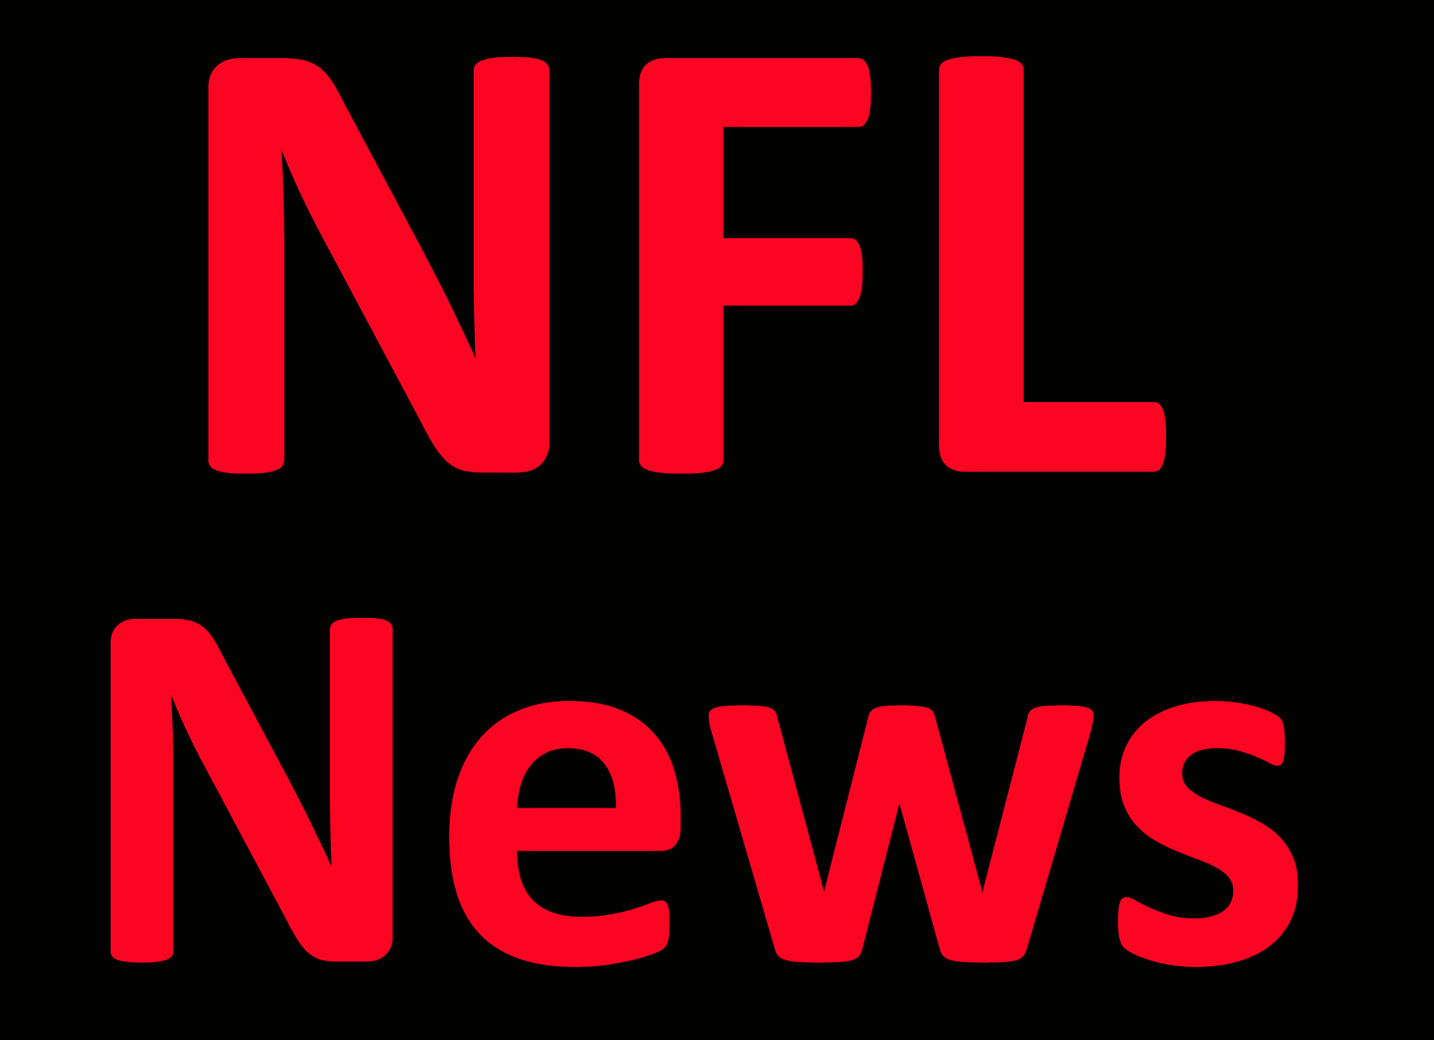 NFL News: Former Miss. welfare agency leader pleads guilty Per Report